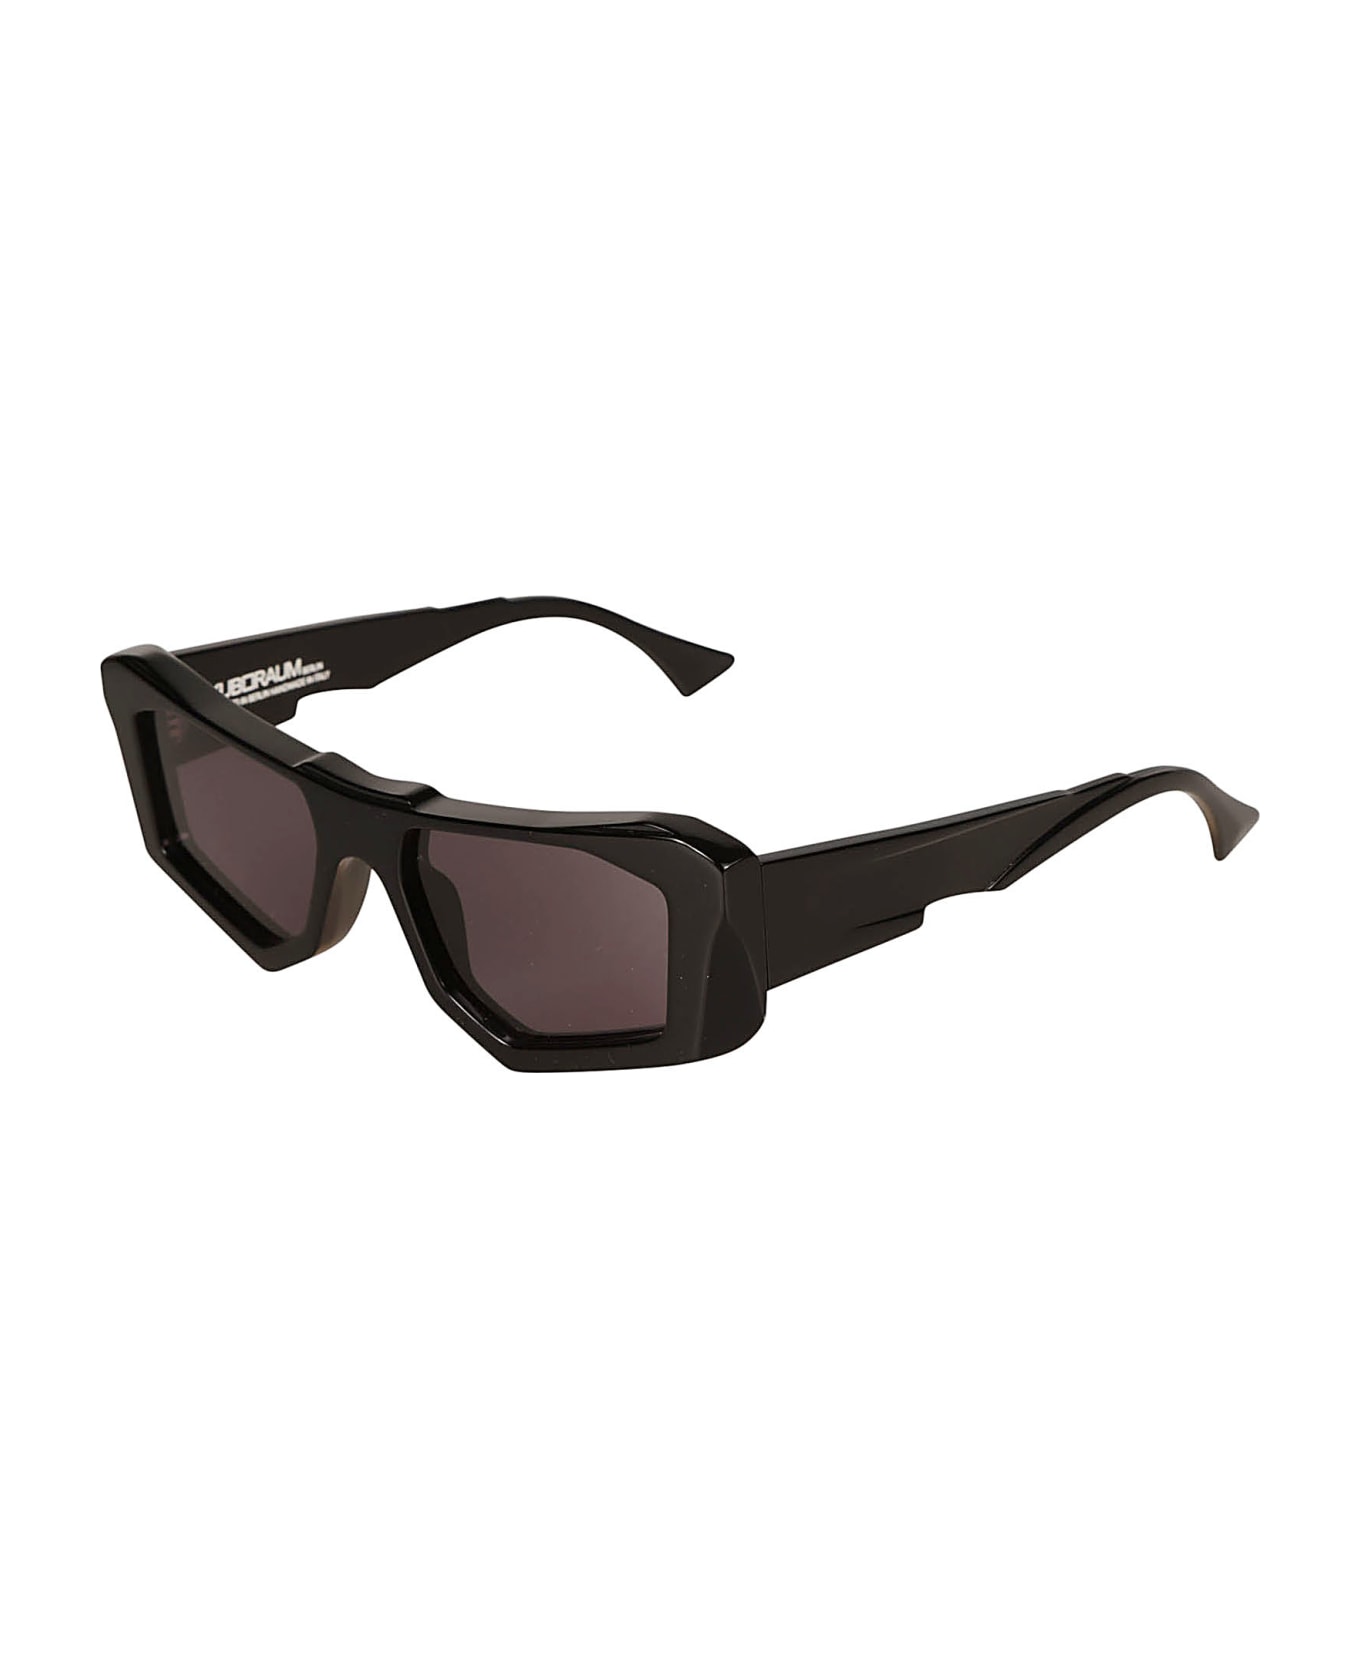 Kuboraum F6 Sunglasses Sunglasses - black